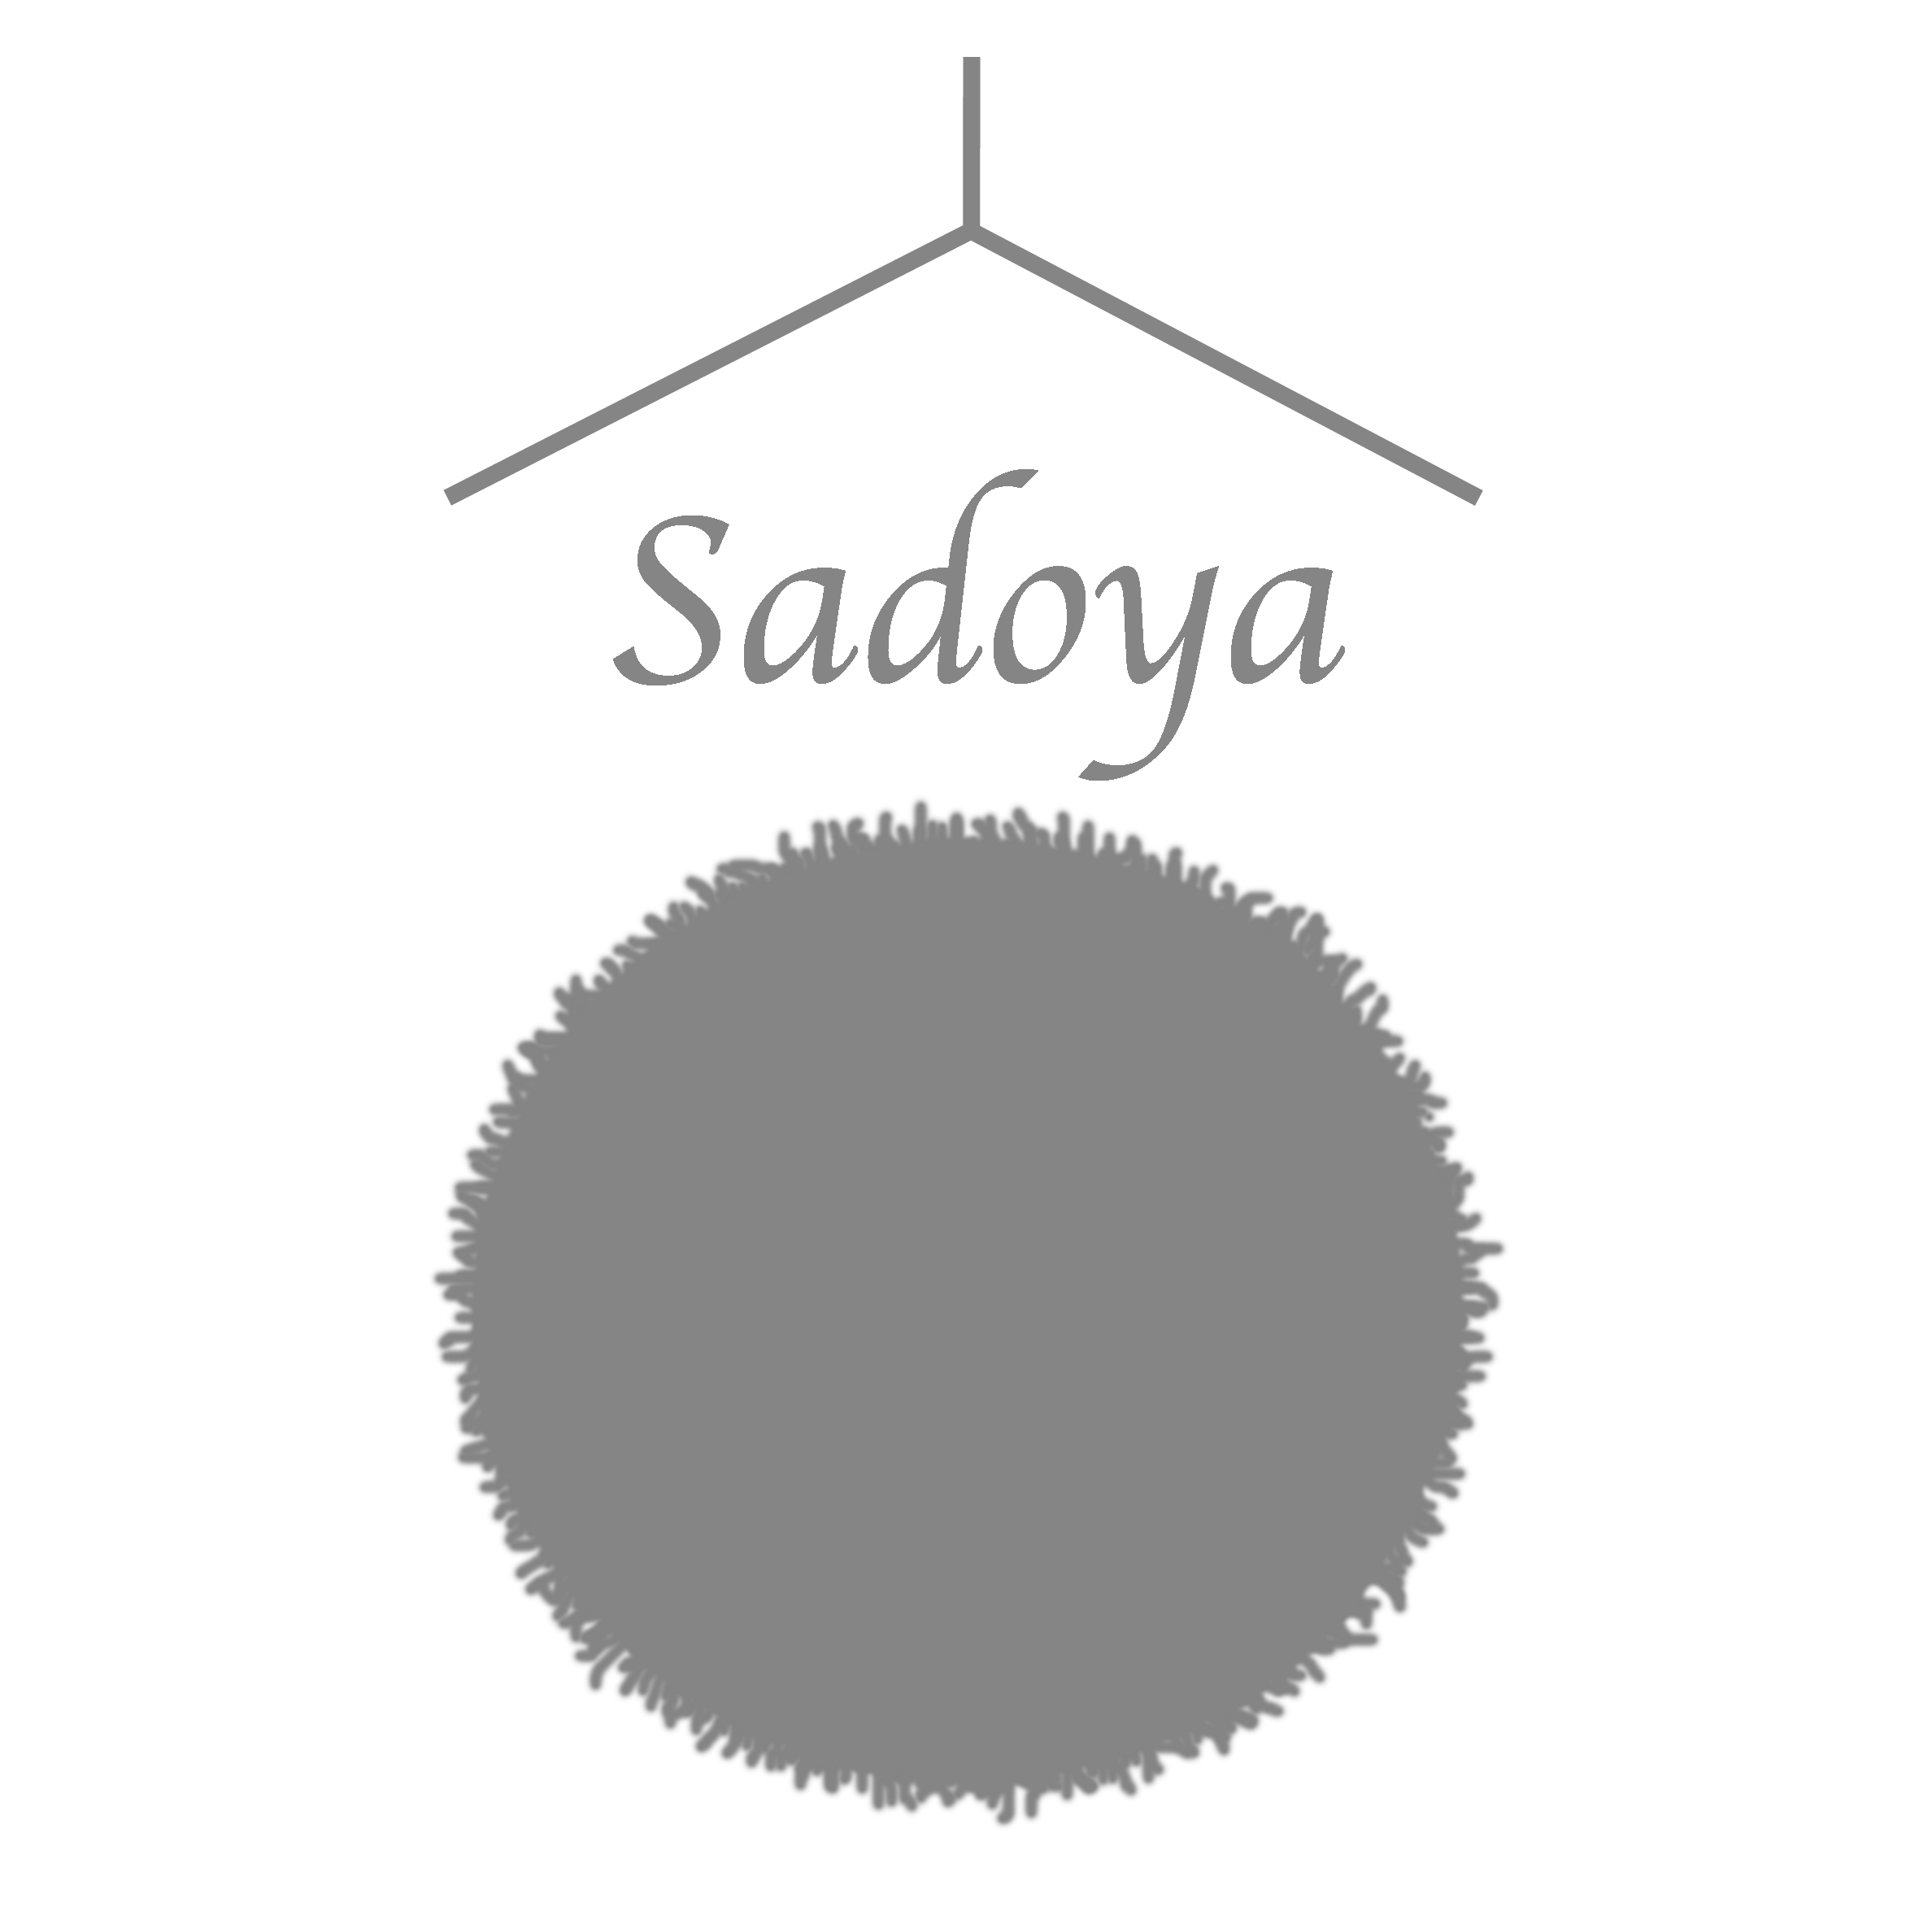 Sadoyaのロゴ